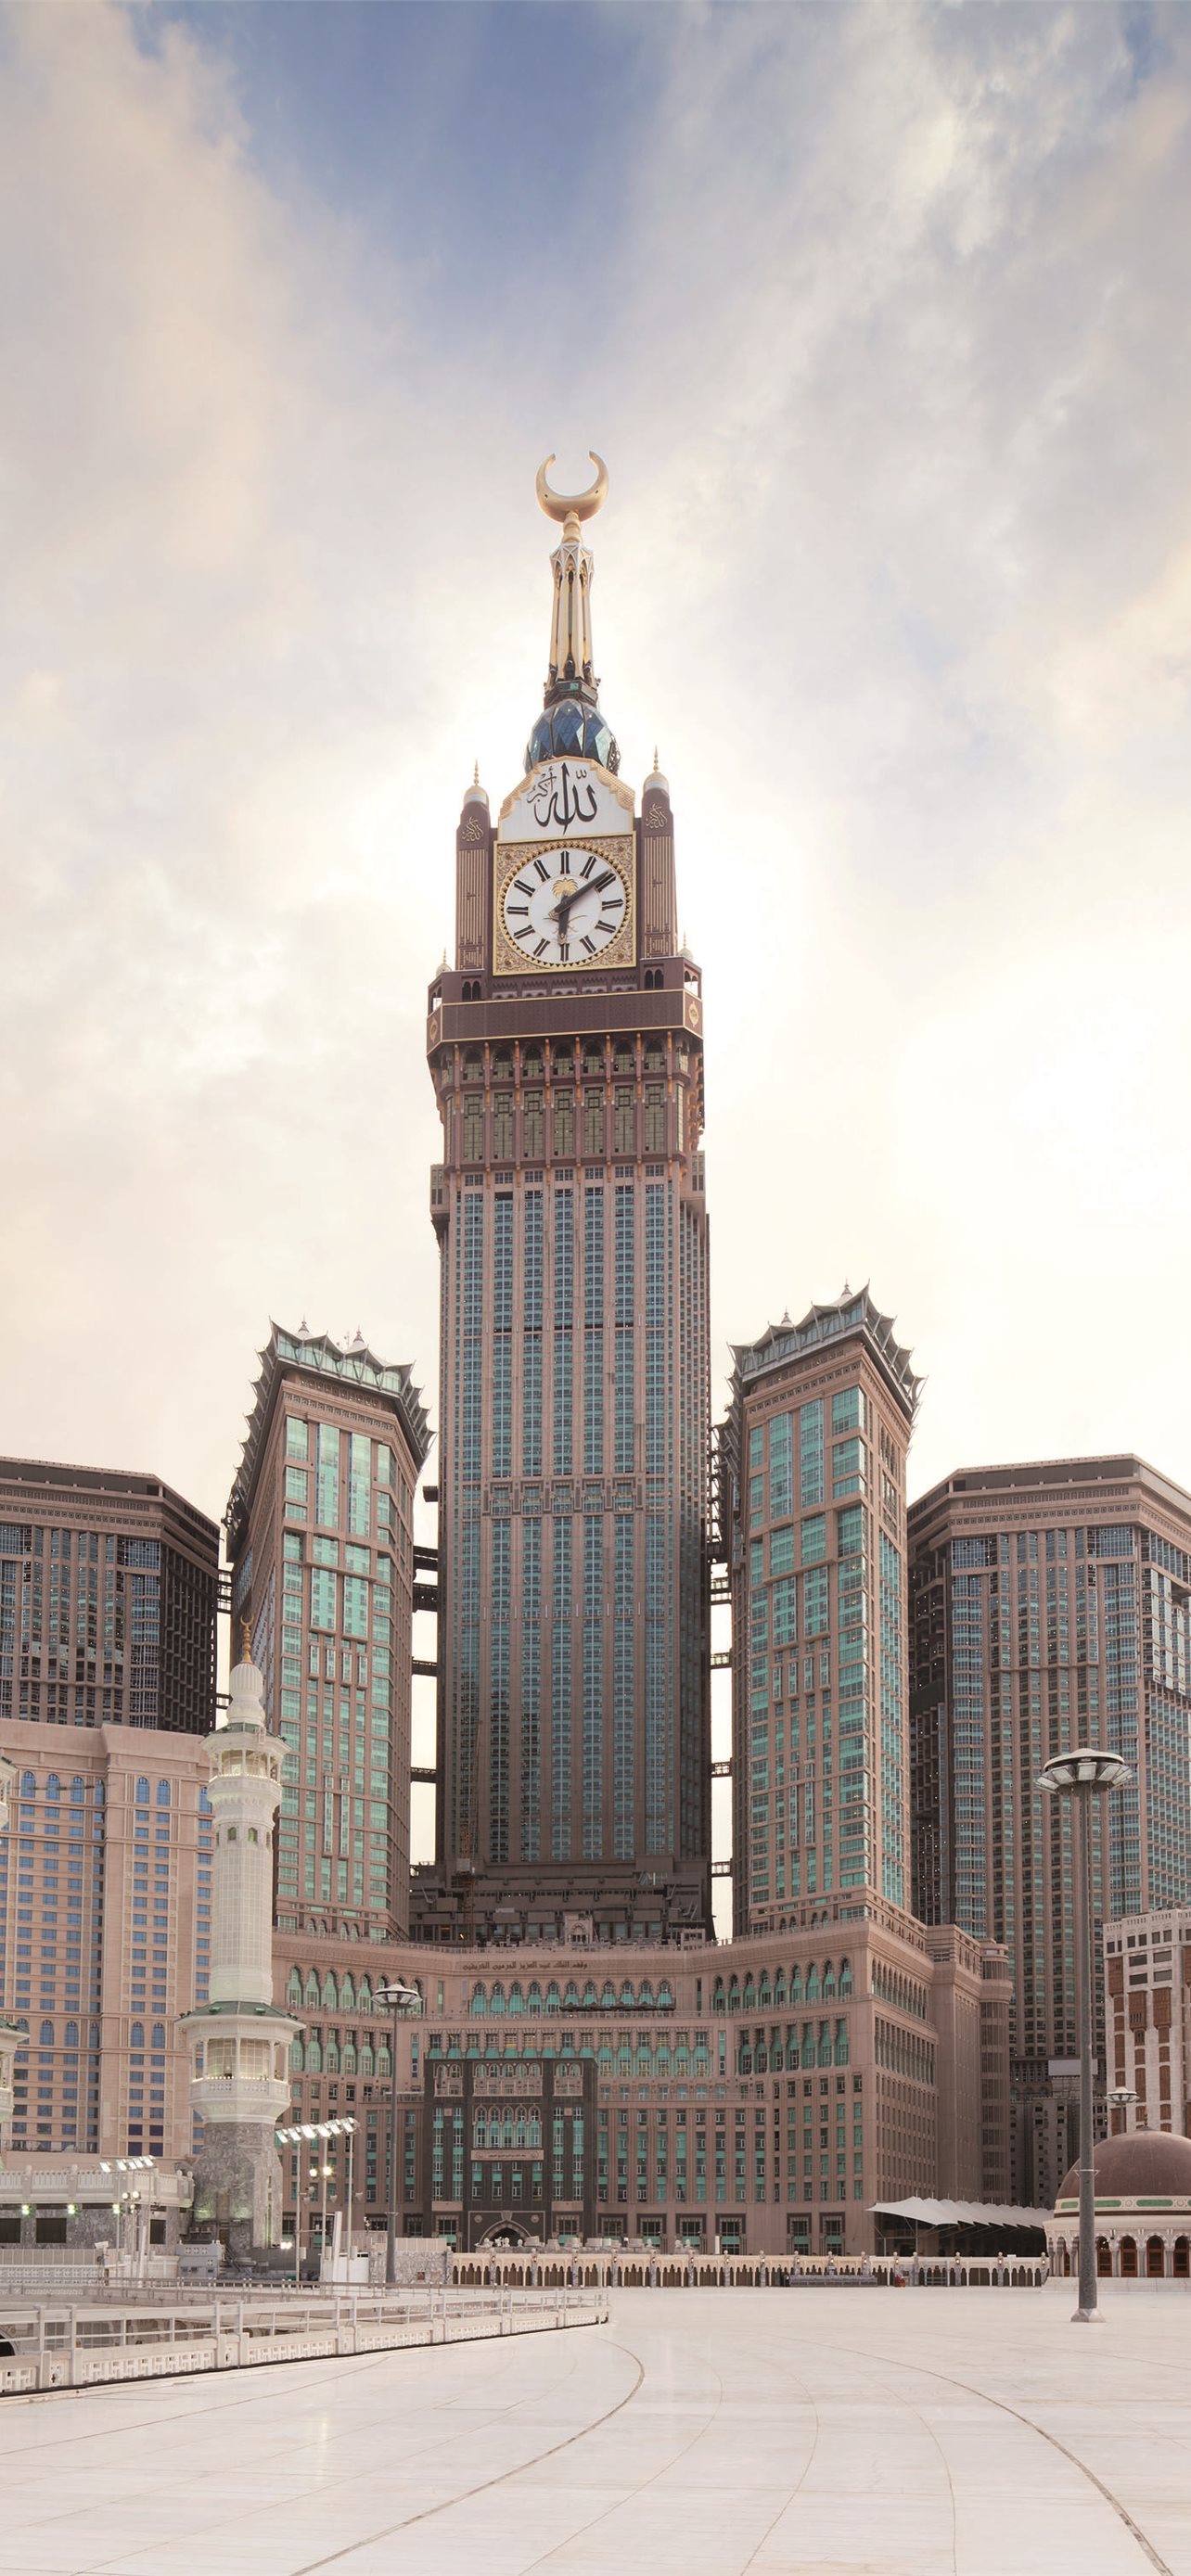 Completed Makkah Royal Hotel Clock Tower in Saudi ... iPhone Wallpapers  Free Download